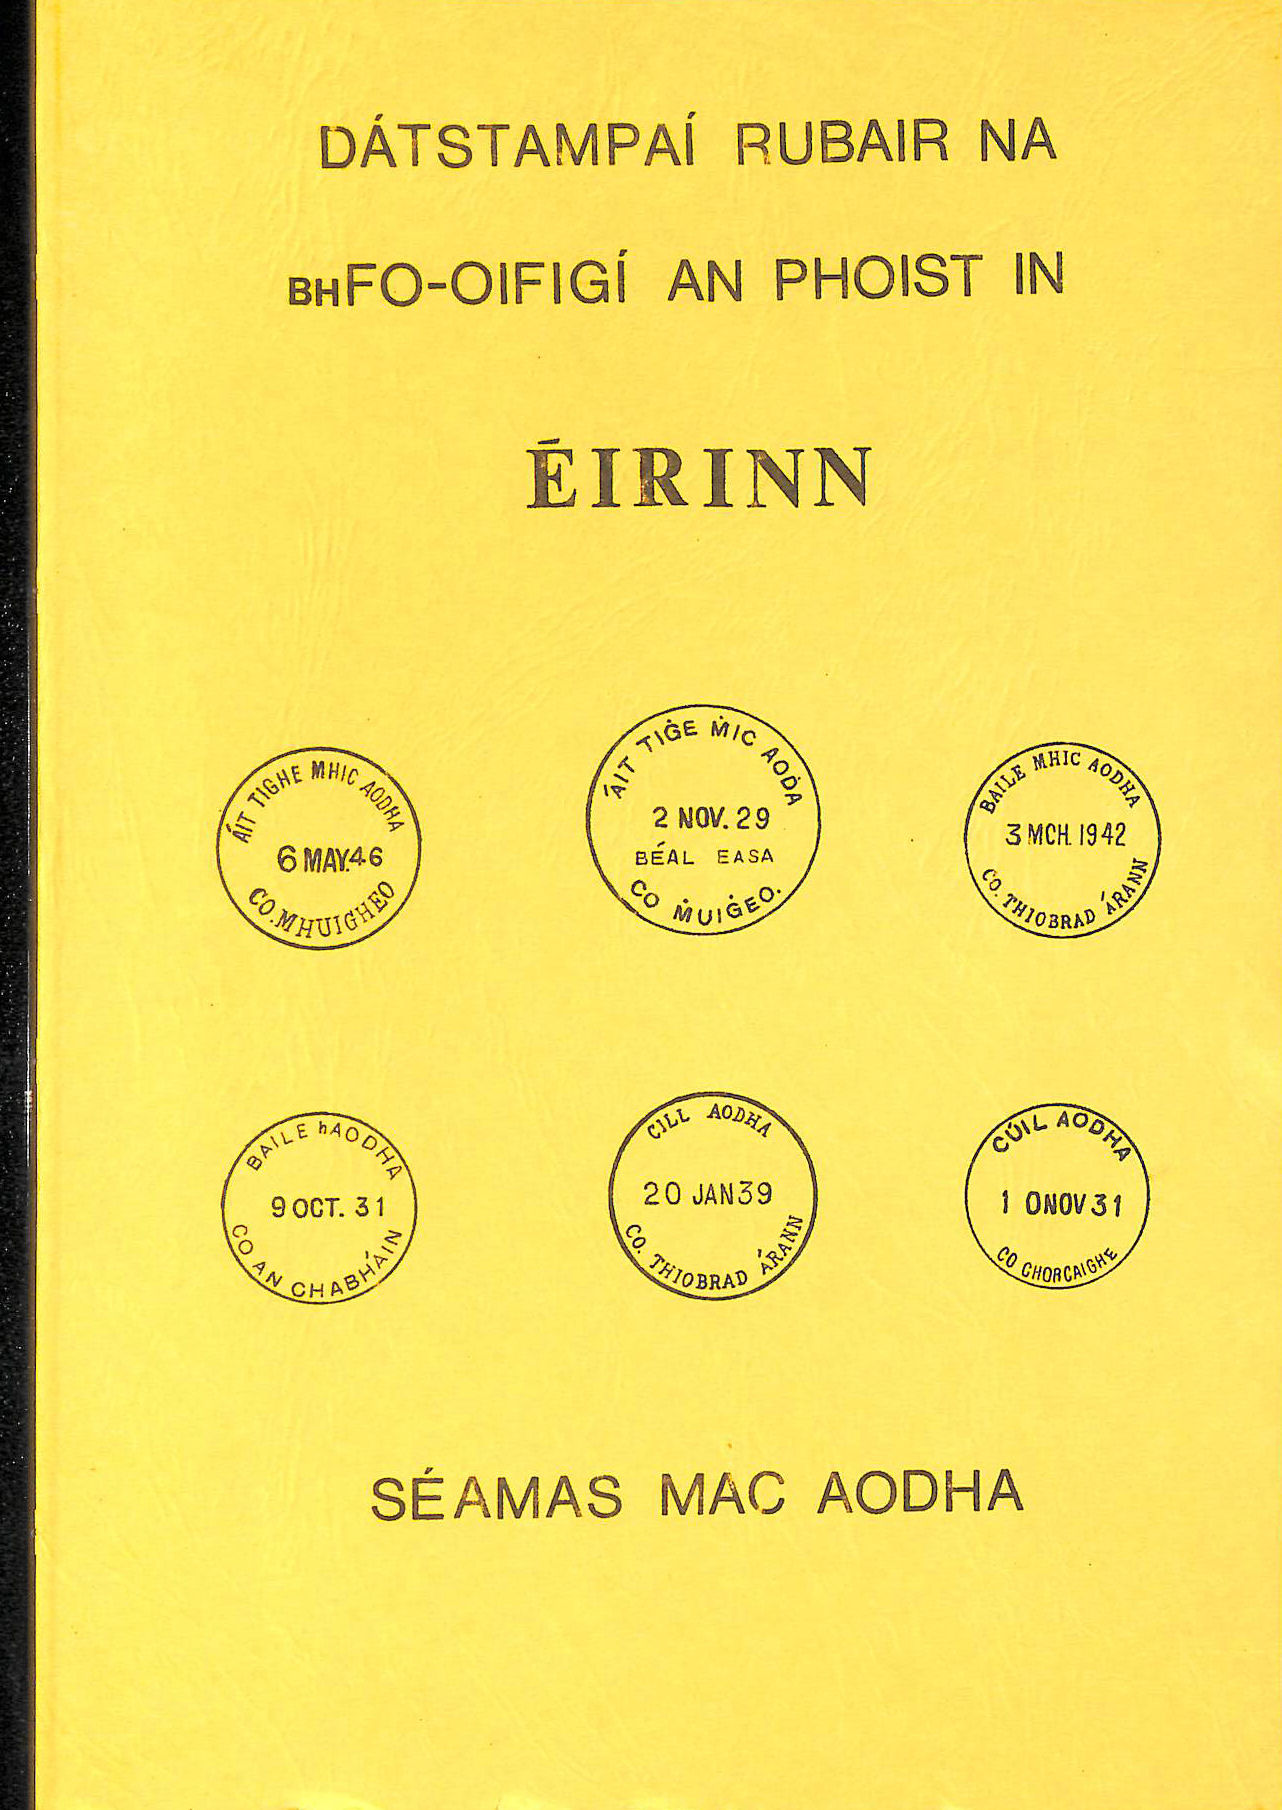 SEAMS MAC AODHA - Sub-office Rubber Datestamps of Ireland